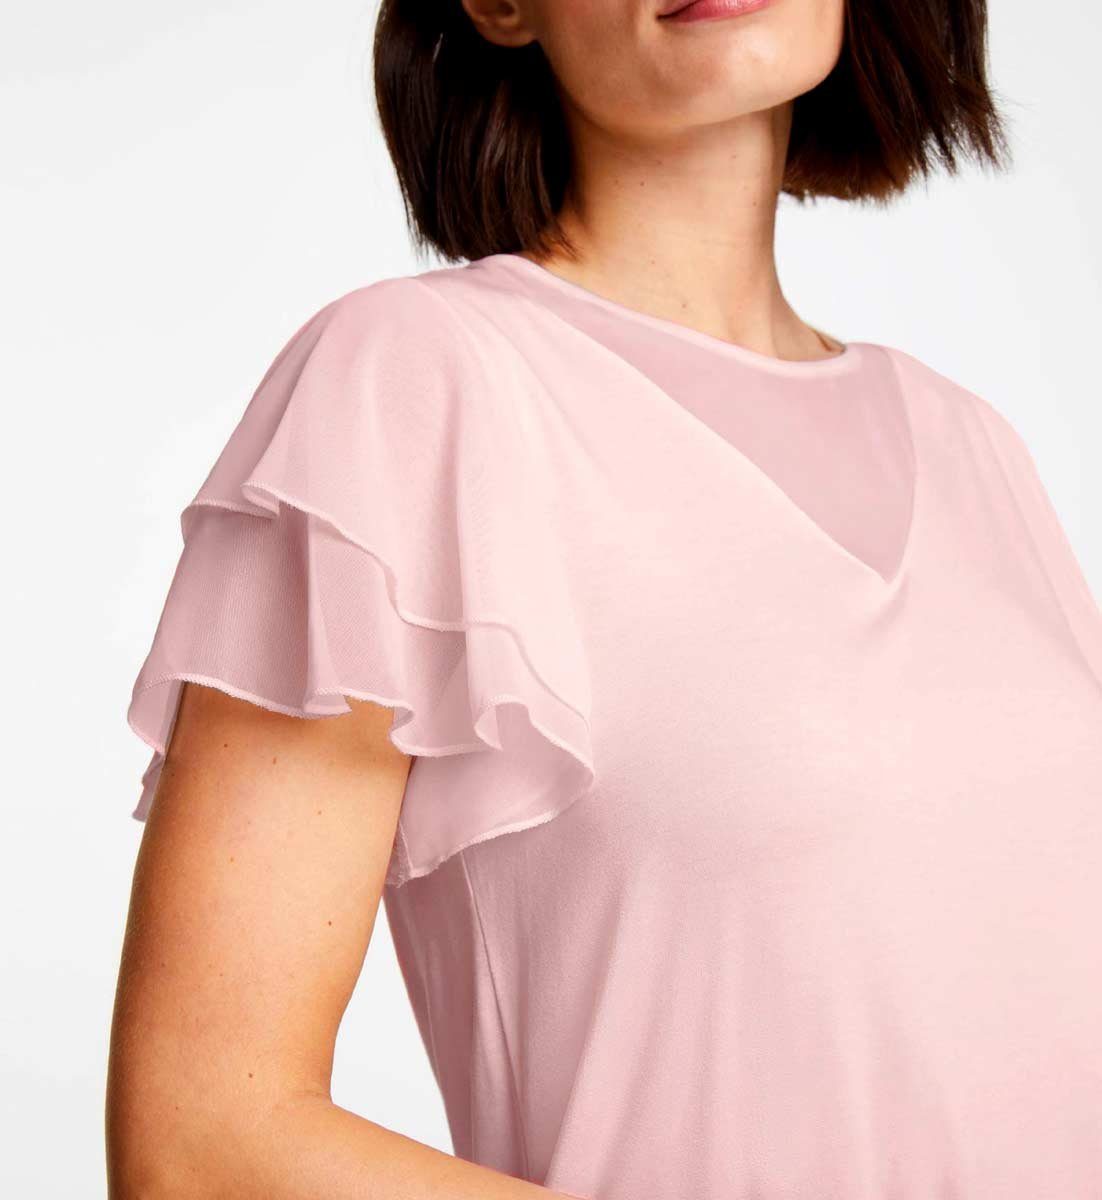 Ashley rosé m. by ASHLEY Damen Designer-Jerseyshirt Volants, heine T-Shirt Brooke BROOKE